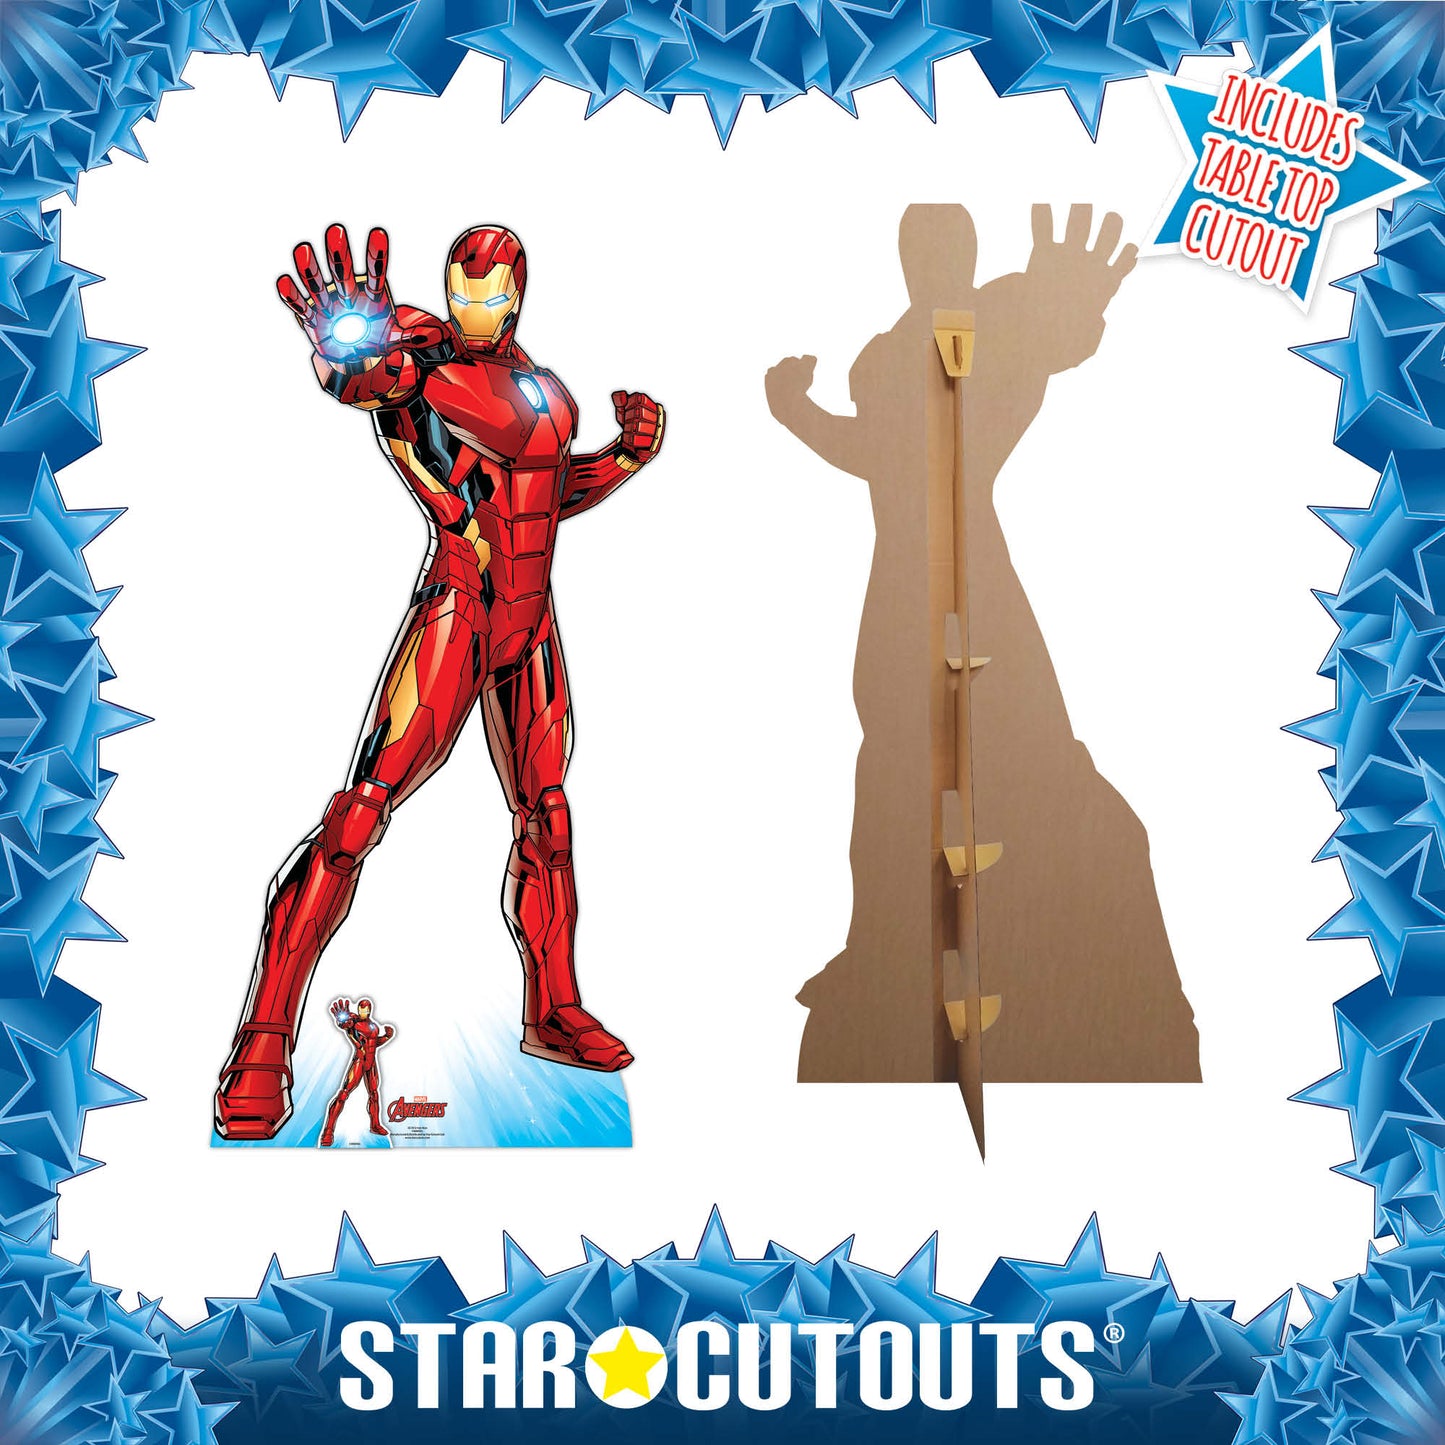 Iron Man Superhero Cardboard Cut Out Height 191cm